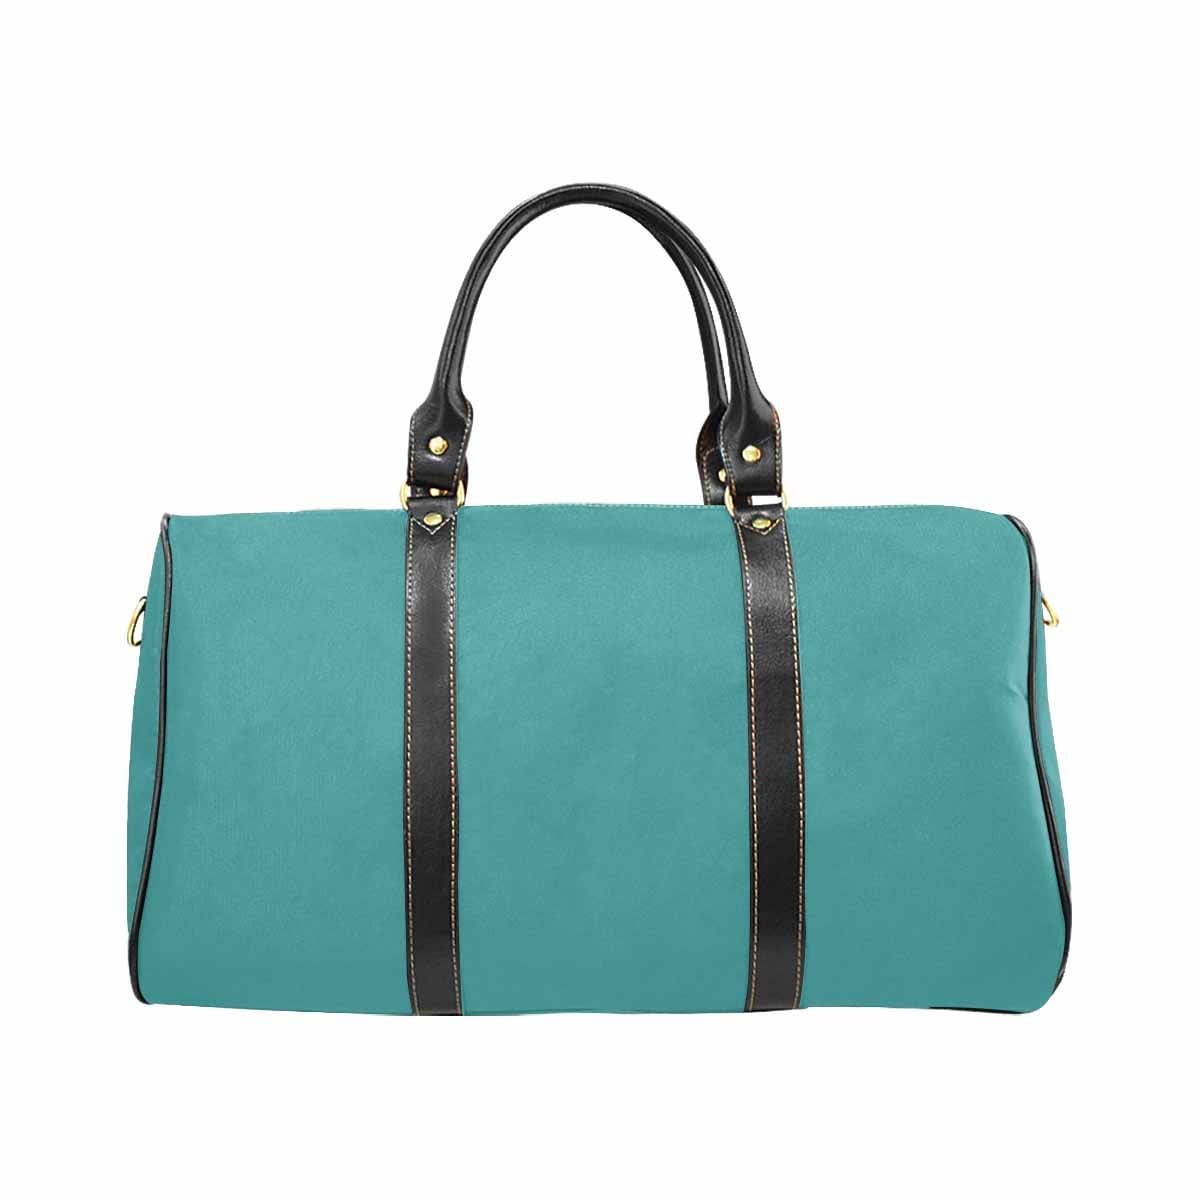 Mint Blue Travel Bag Carry On Luggage Adjustable Strap Black - Bags | Travel